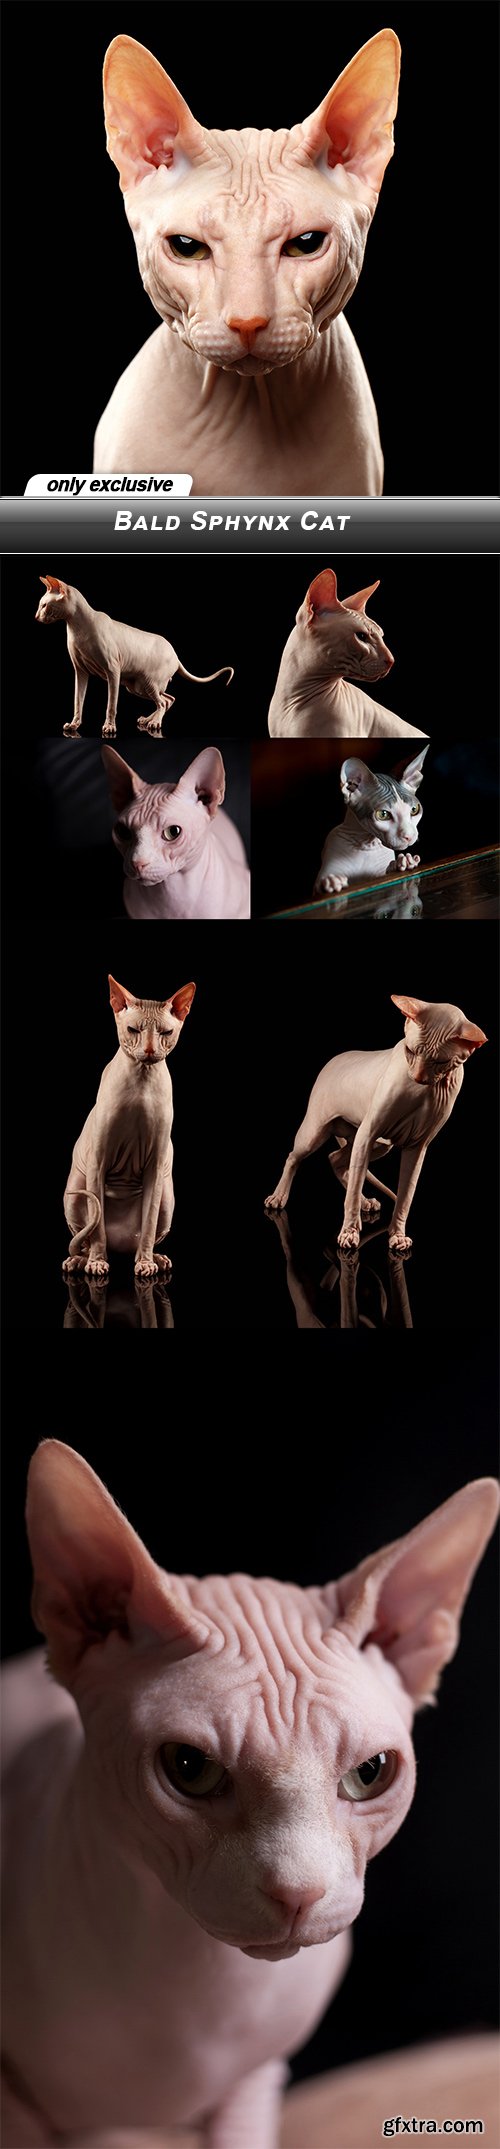 Bald Sphynx Cat - 8 UHQ JPEG